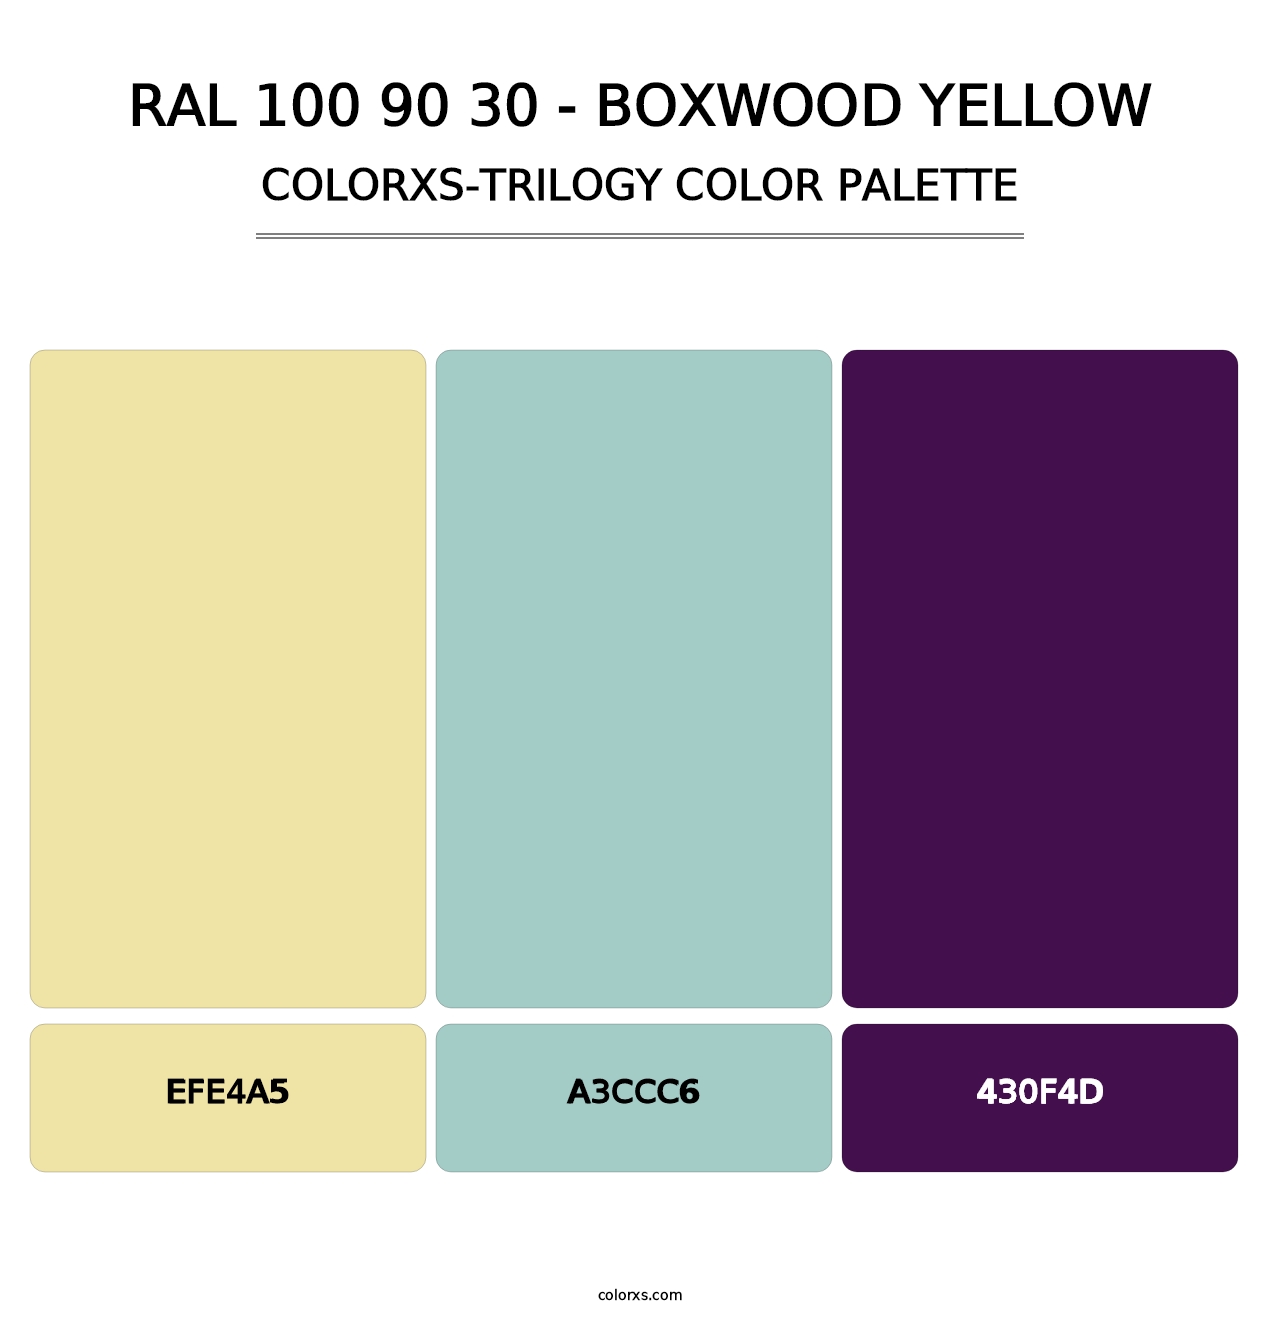 RAL 100 90 30 - Boxwood Yellow - Colorxs Trilogy Palette